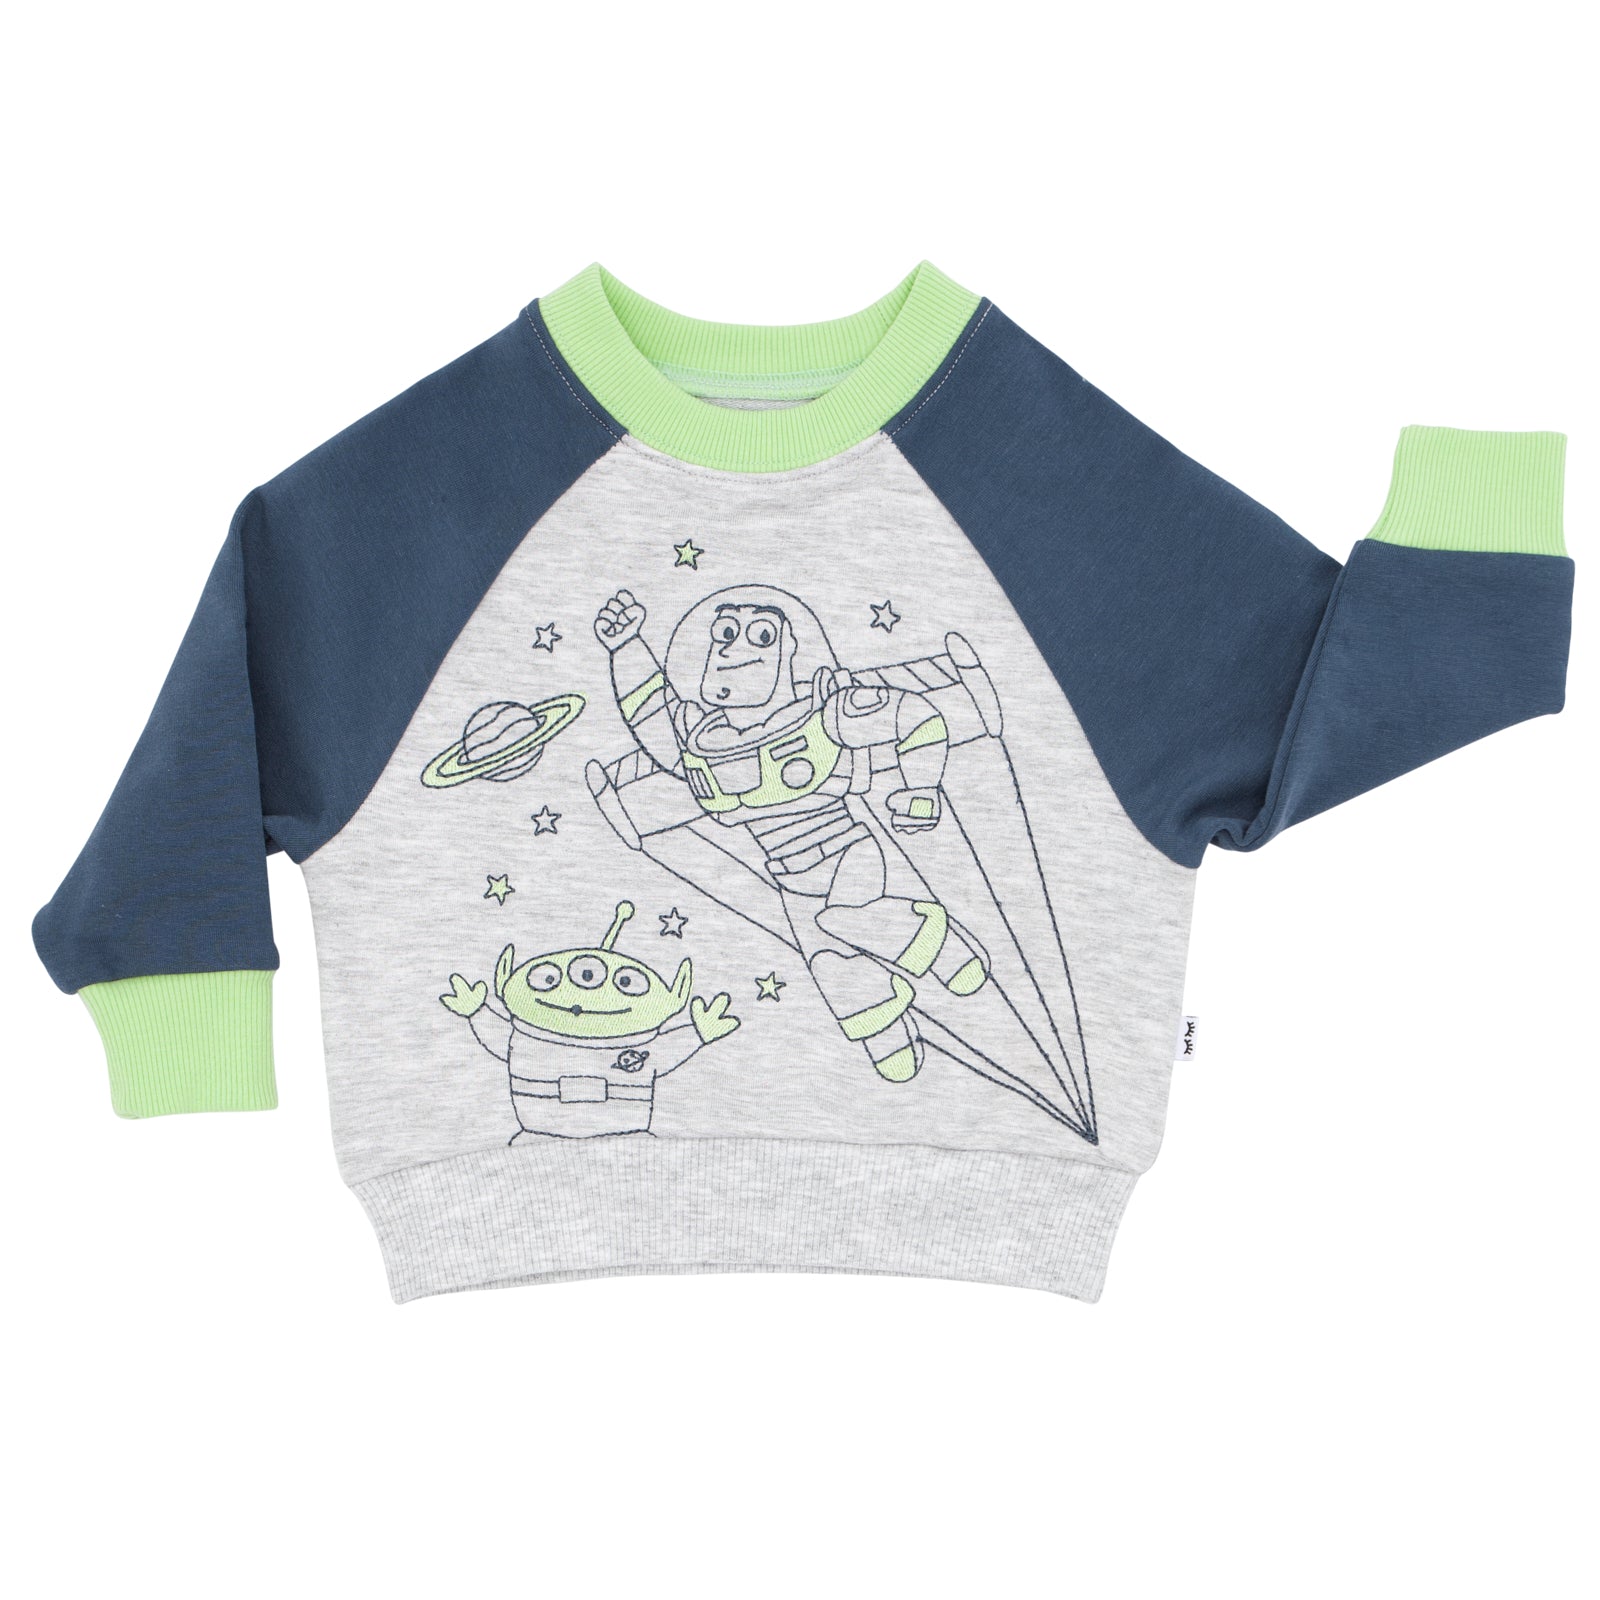 Flat lay image of a Disney Pixar Buzz Lightyear crewneck sweatshirt